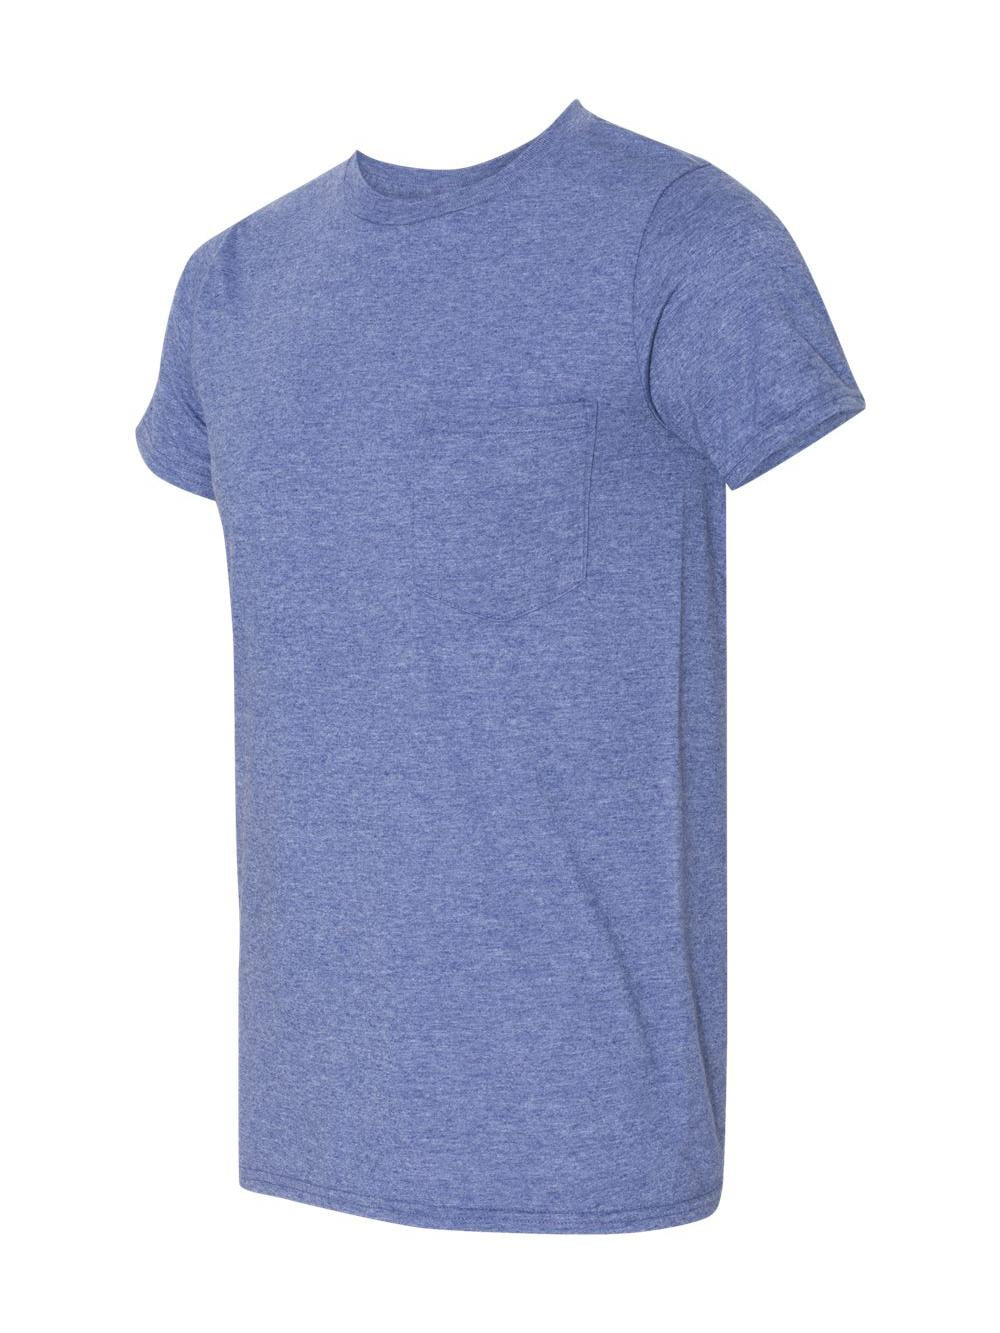 Anvil - Lightweight Pocket T-Shirt - 983 - Walmart.com